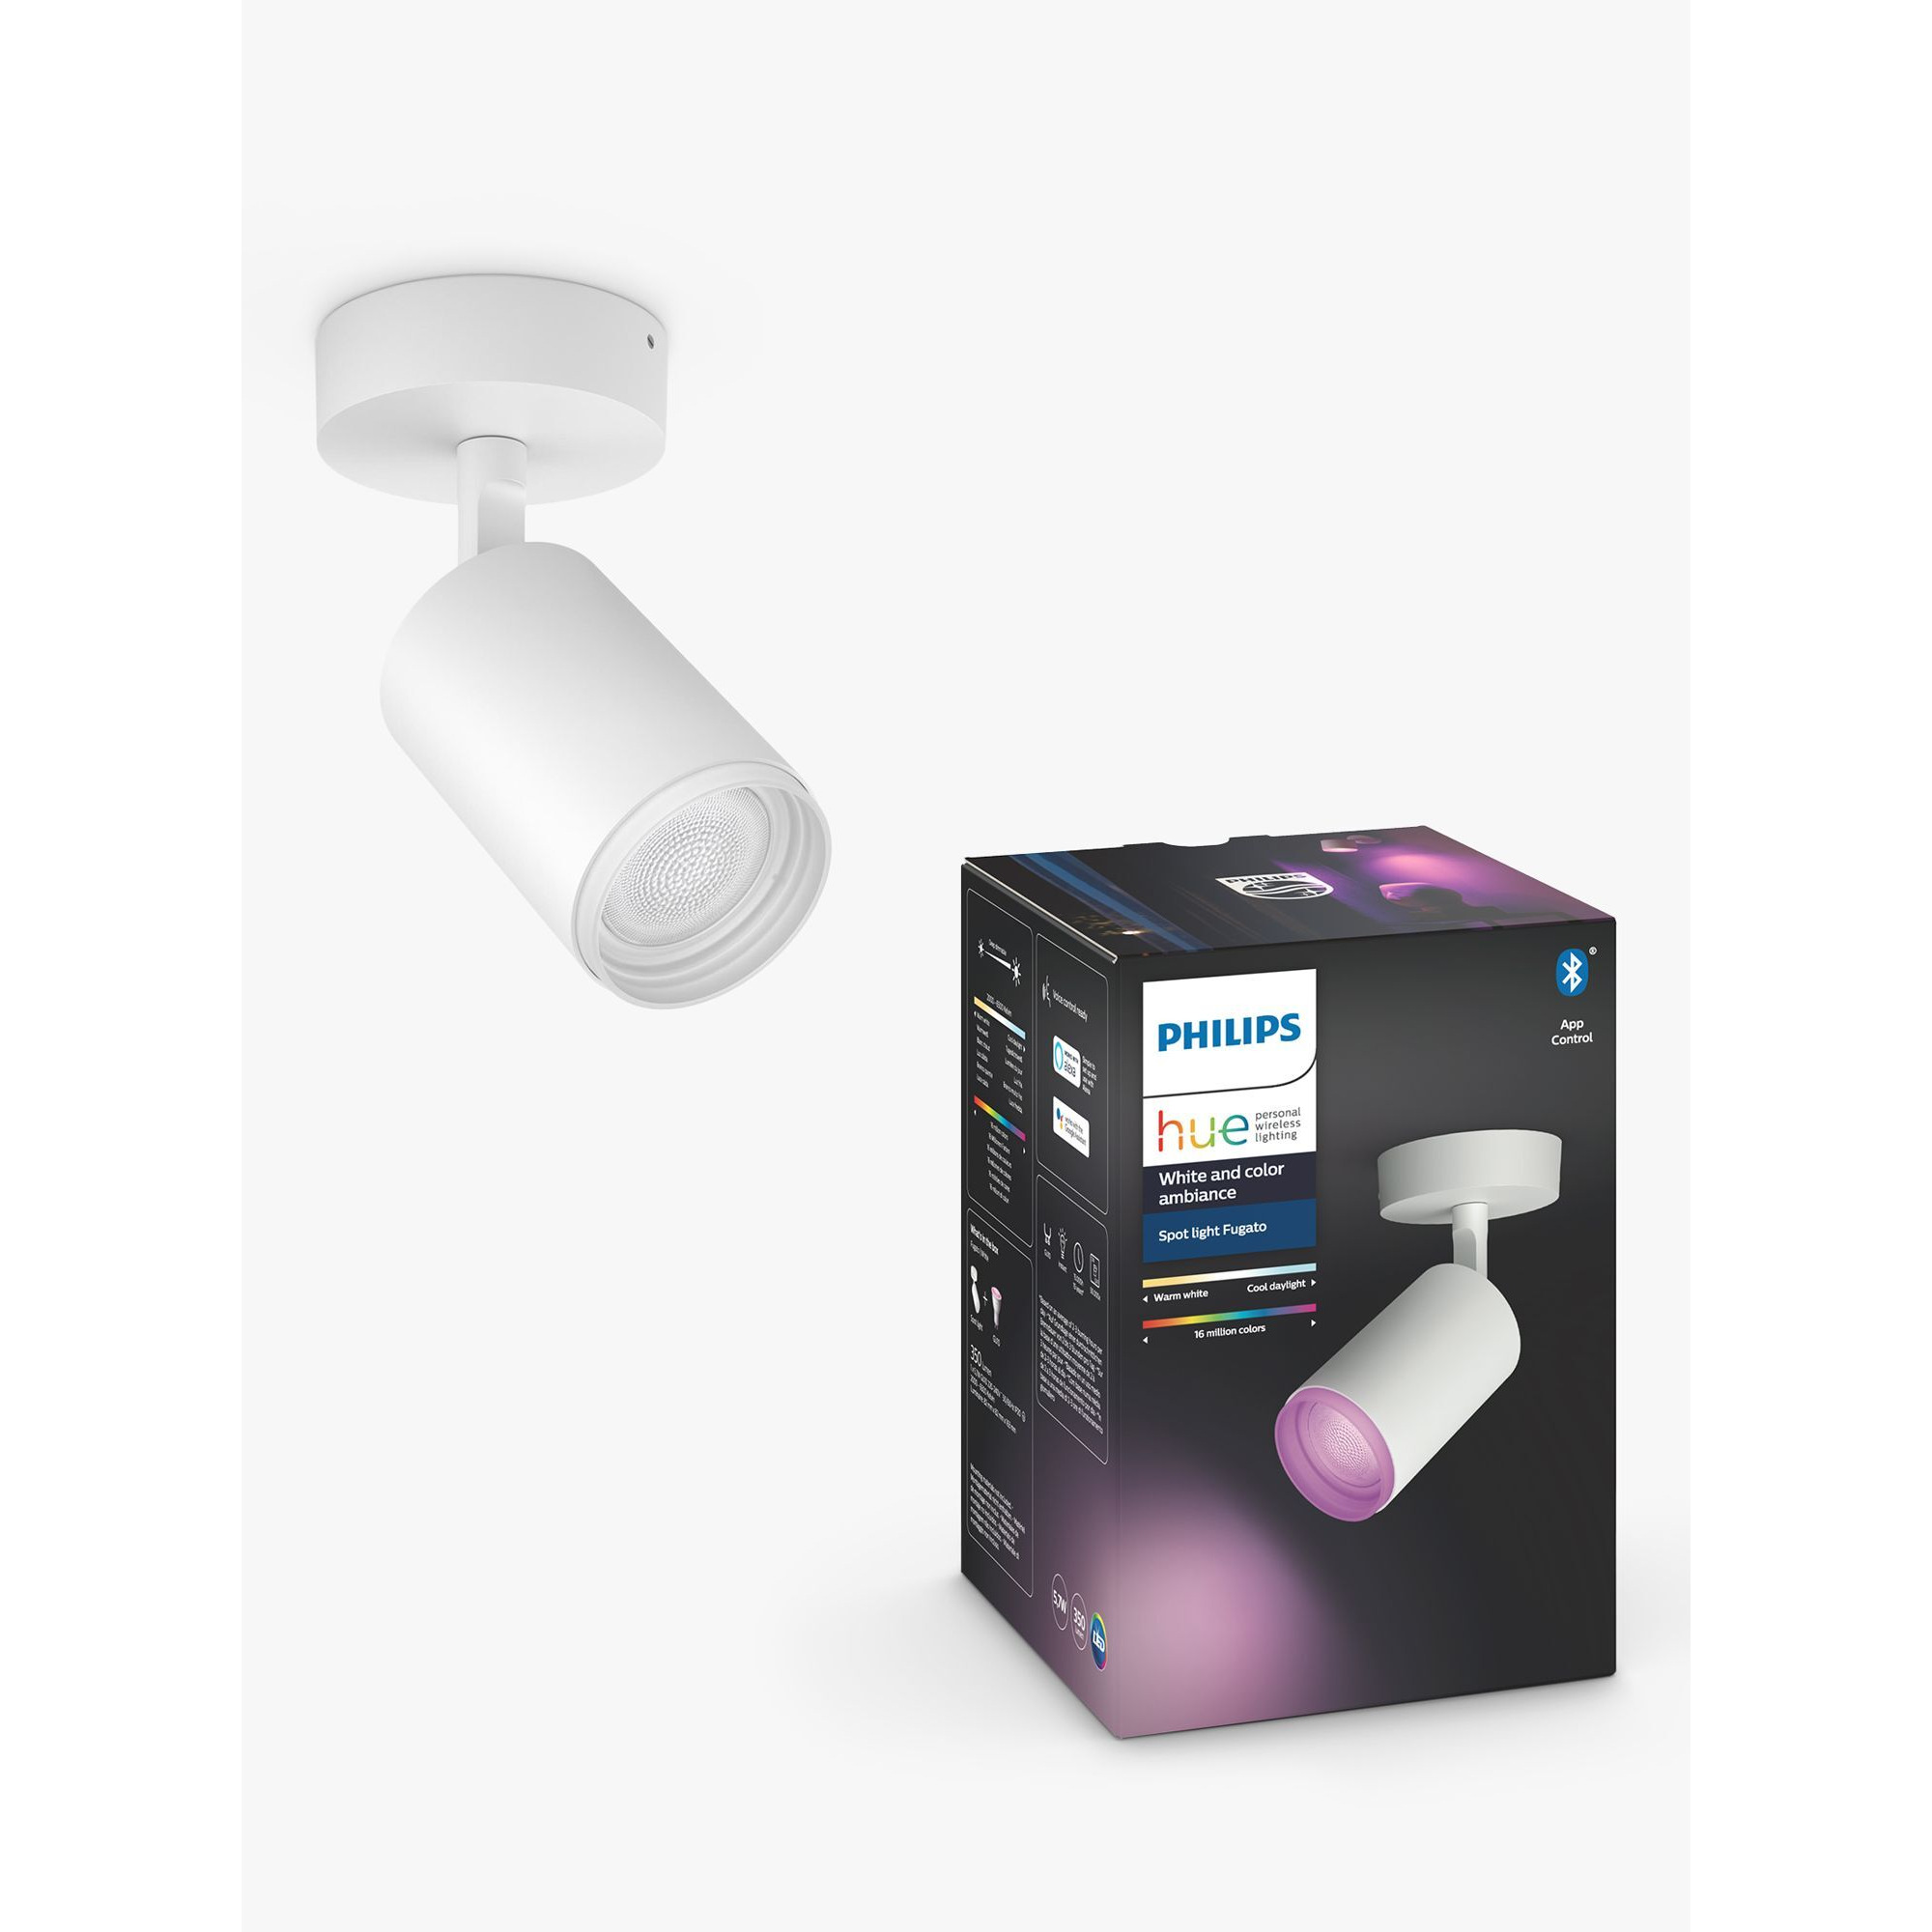 Philips Hue White and Colour Ambiance Fugato LED Smart Single Spotlight, White - image 1